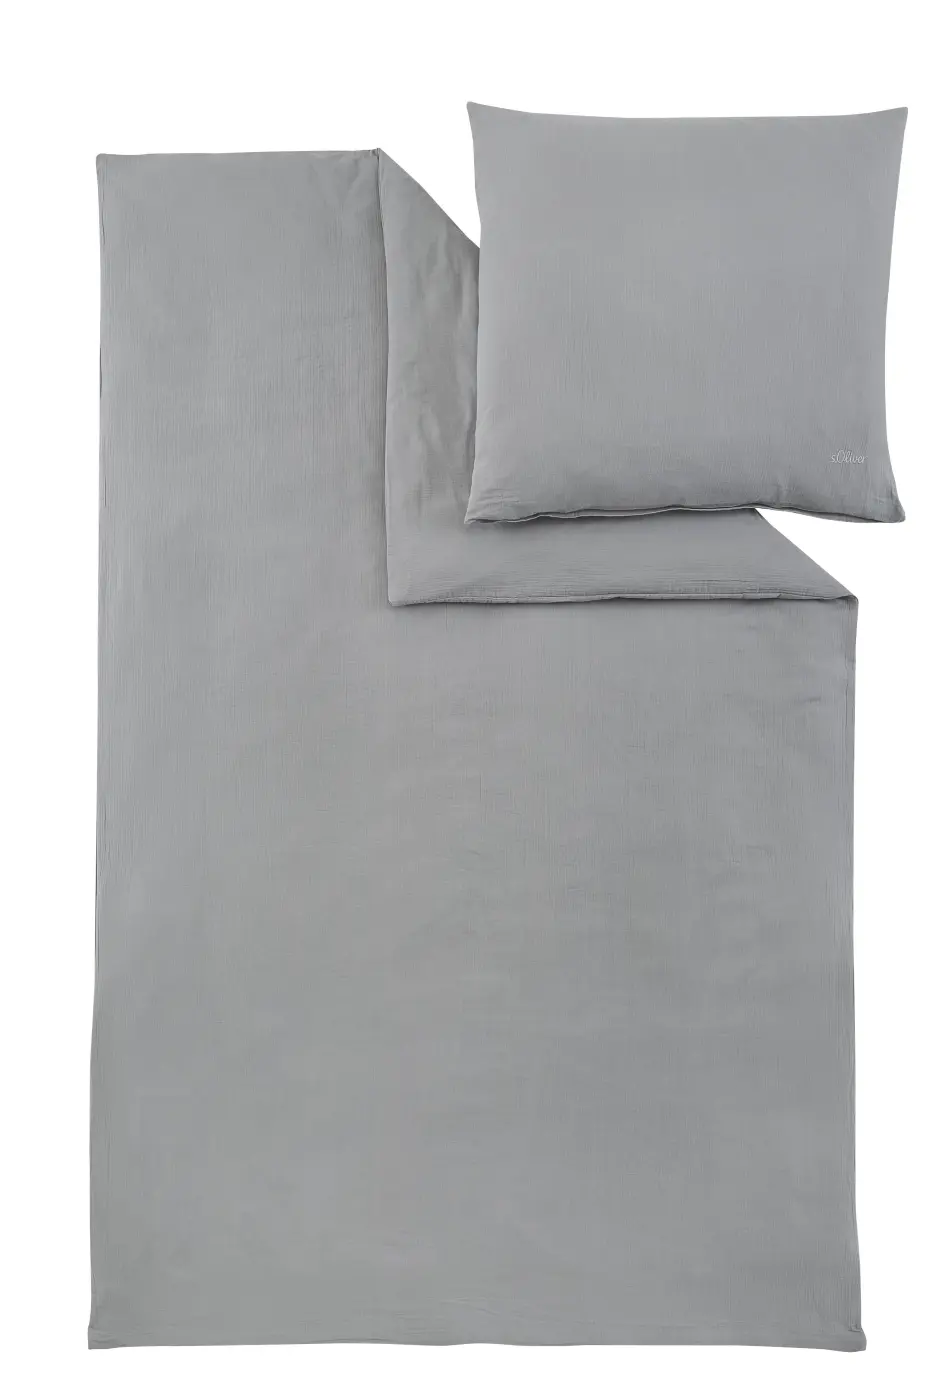 s.Oliver Uni-Musselinbettwäsche 155x220cm in Farbe grau